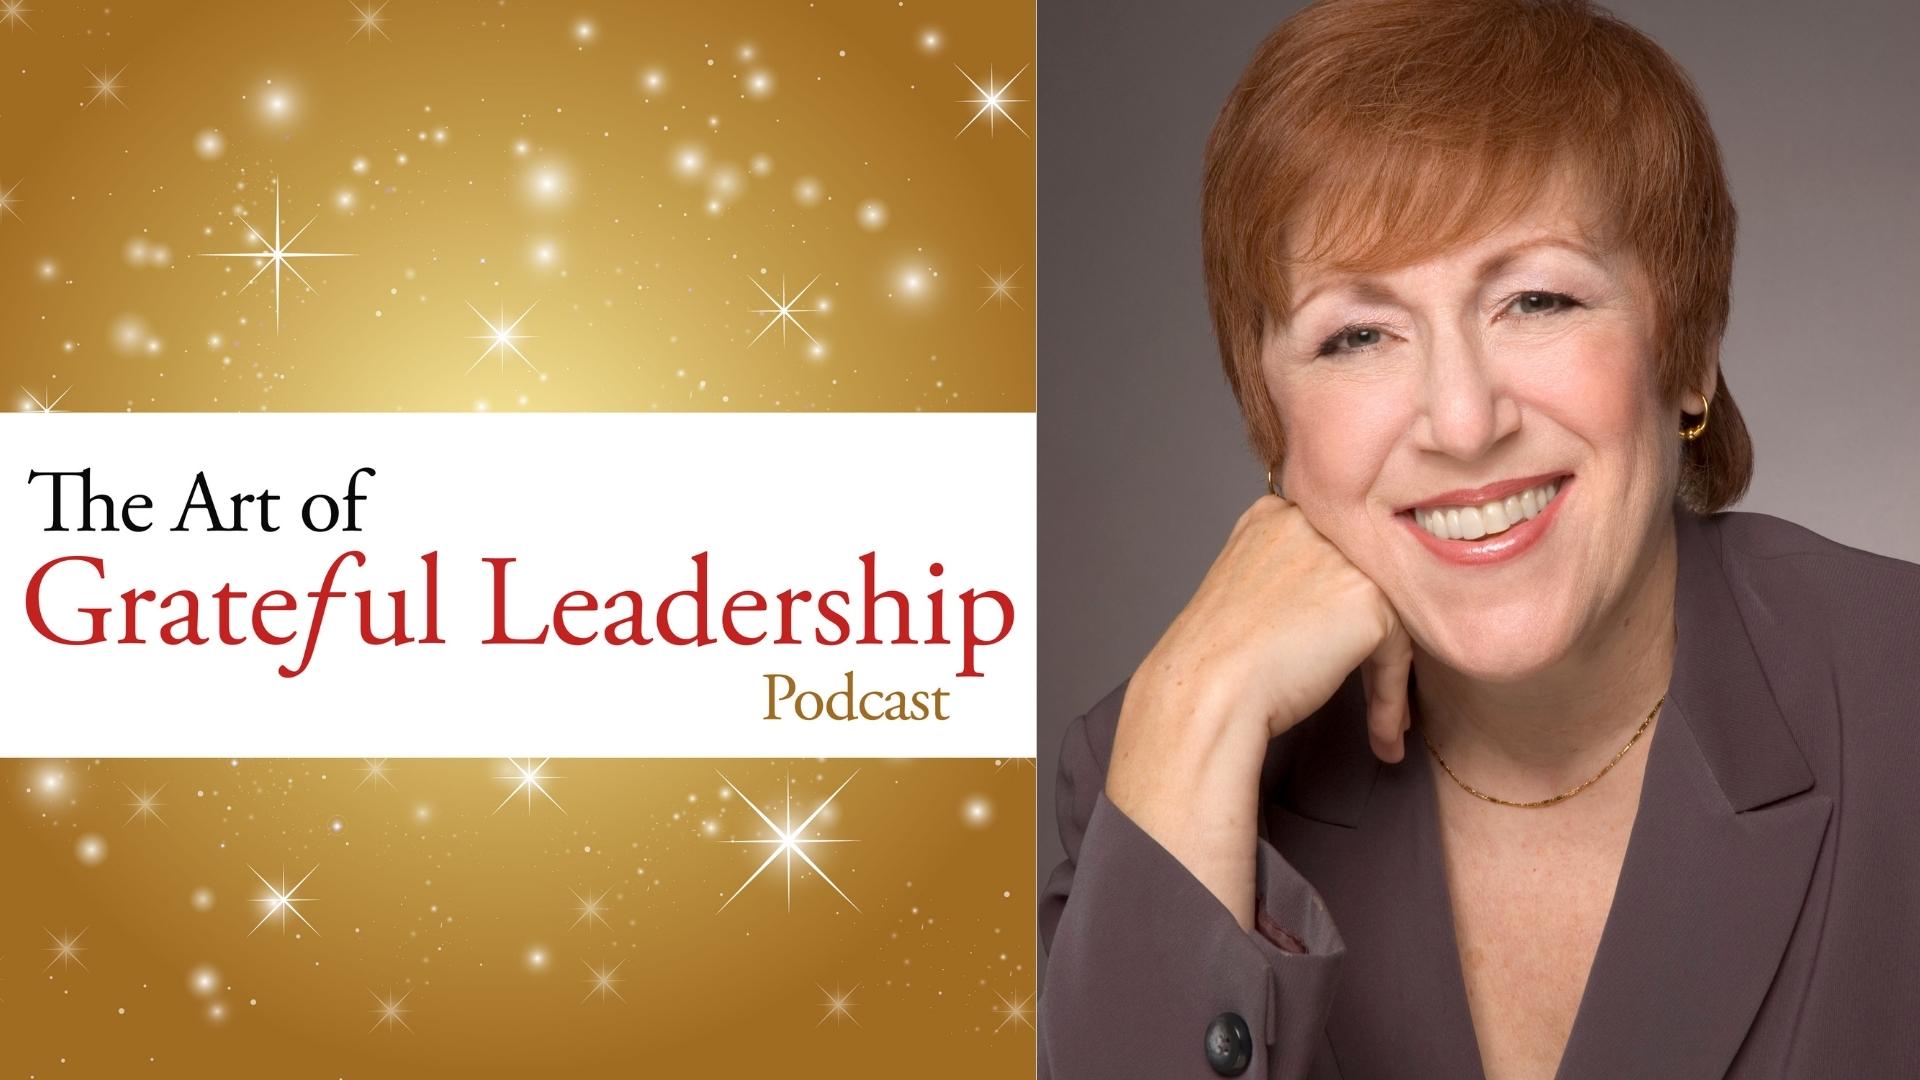 The Art of Grateful Leadership Podcast